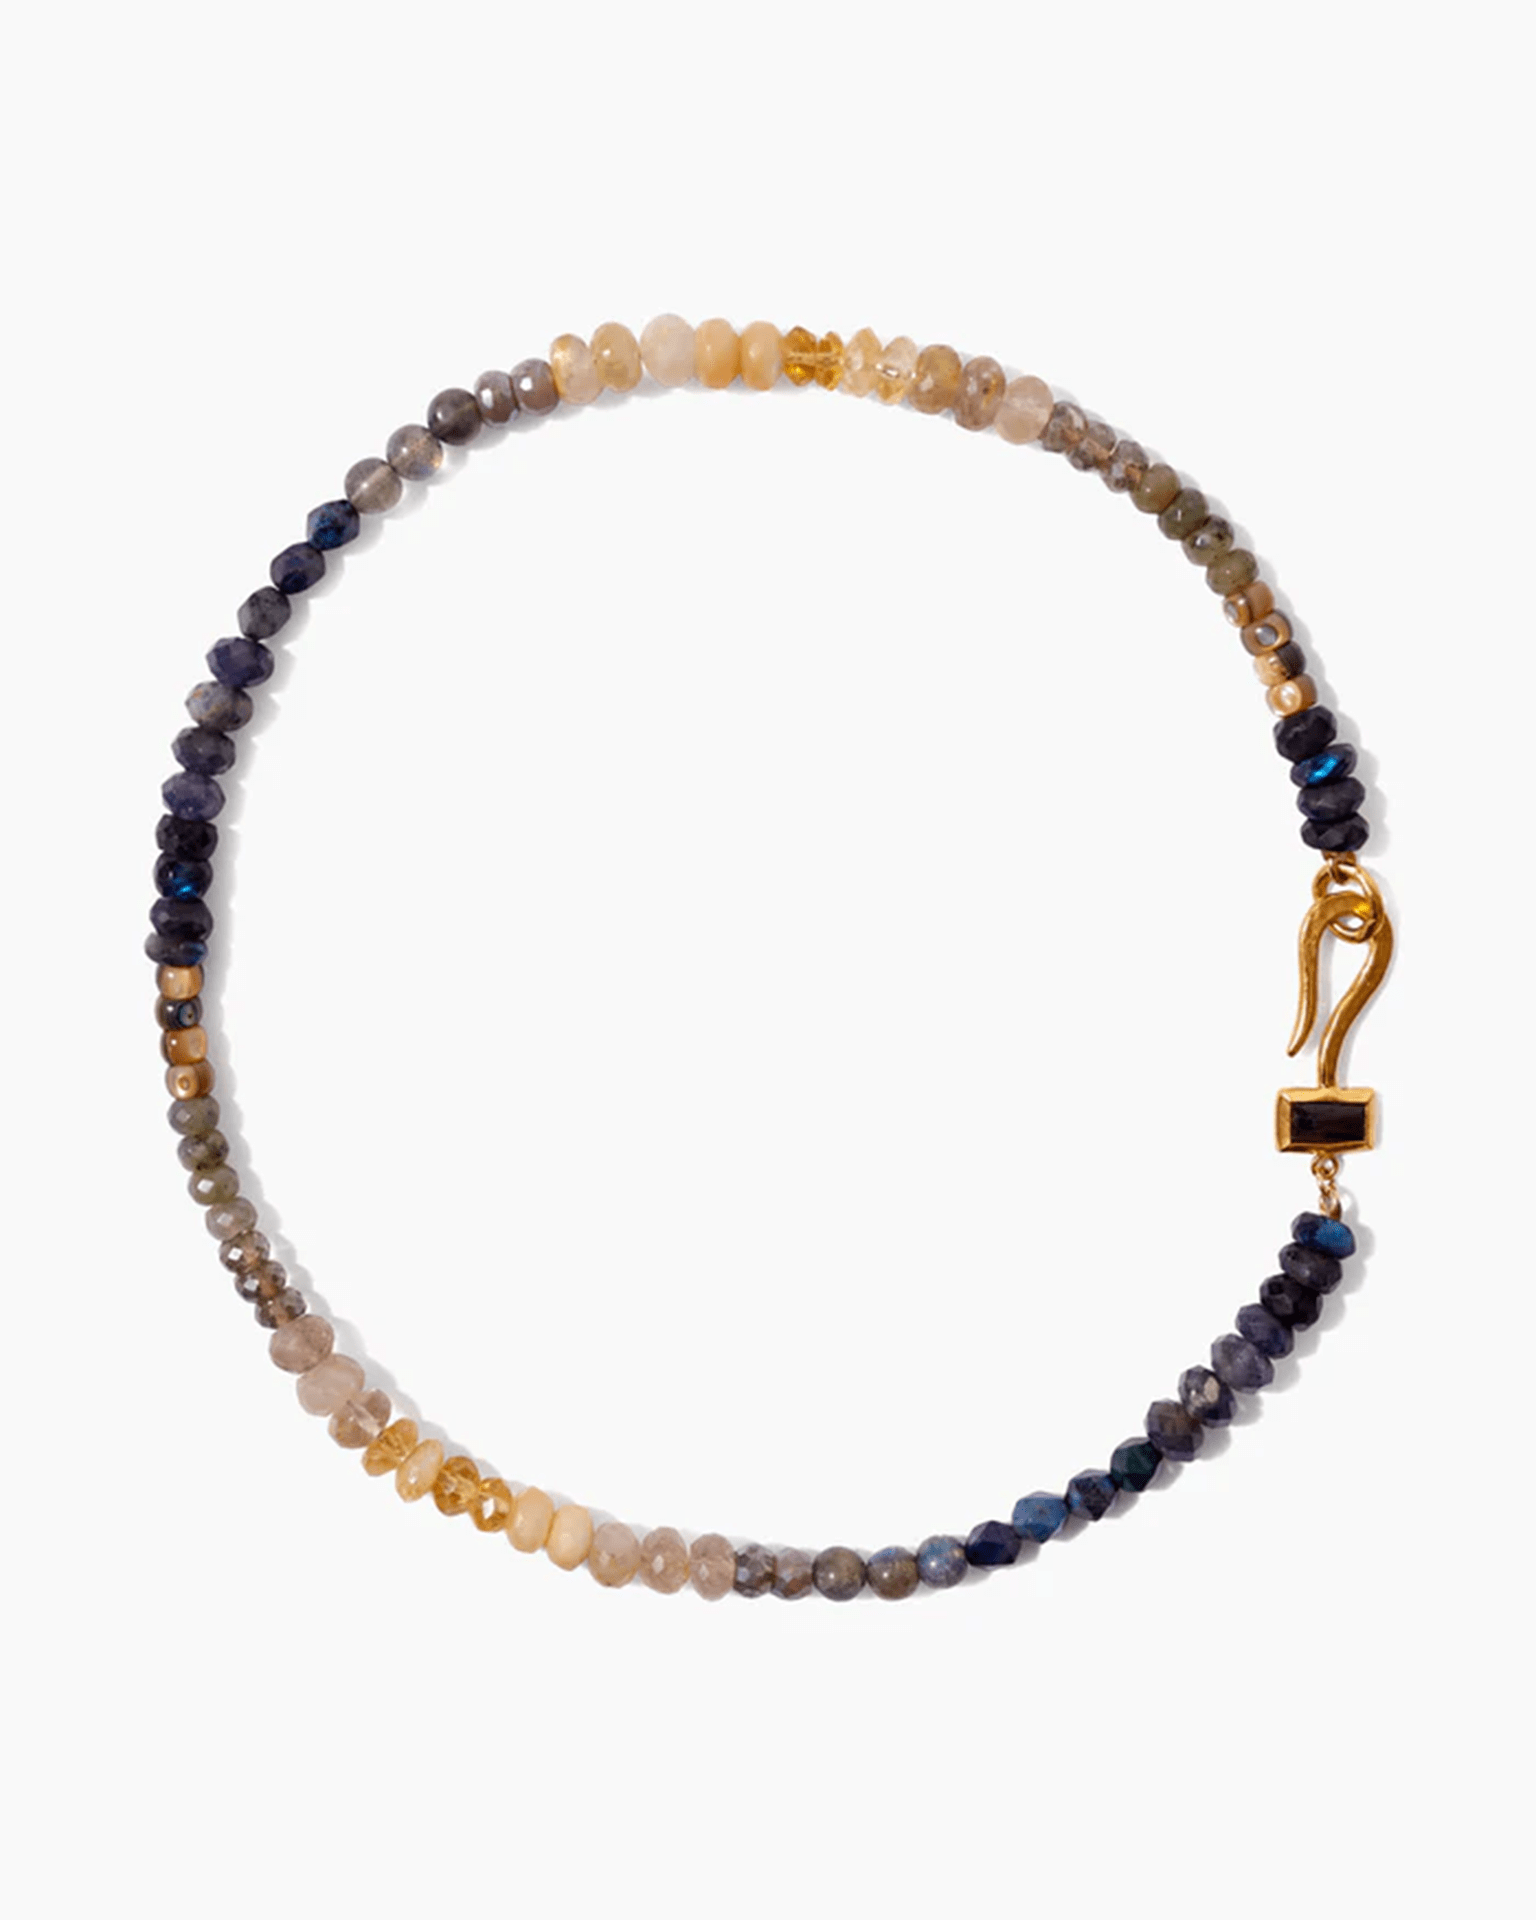 Odyssey Necklace in Labradorite Mix w/ Gold